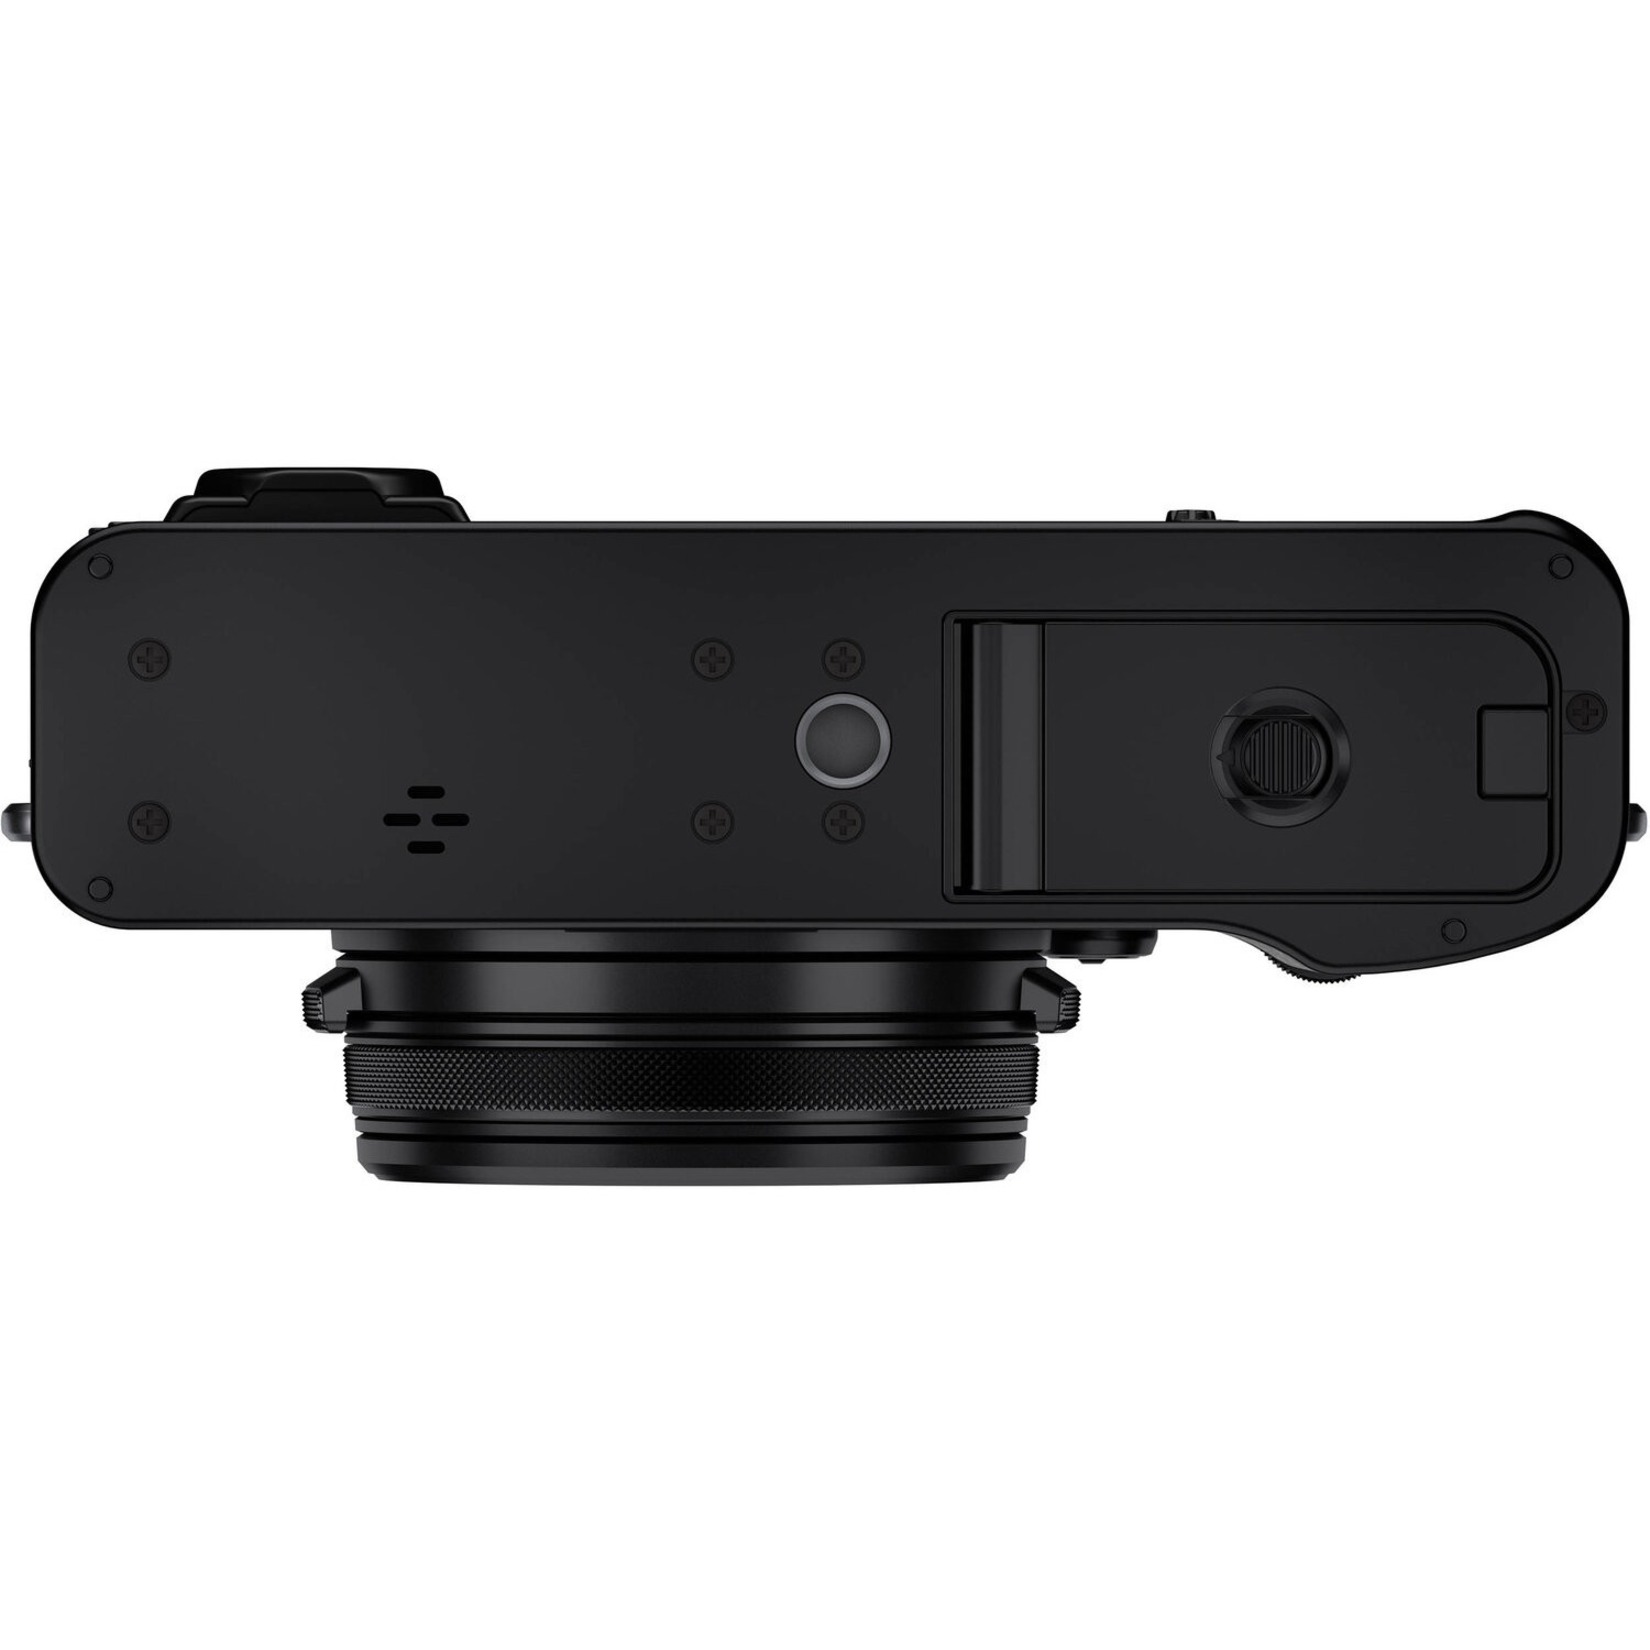 Fujifilm X100V 26.1 Megapixel Compact Camera, Black - image 5 of 9